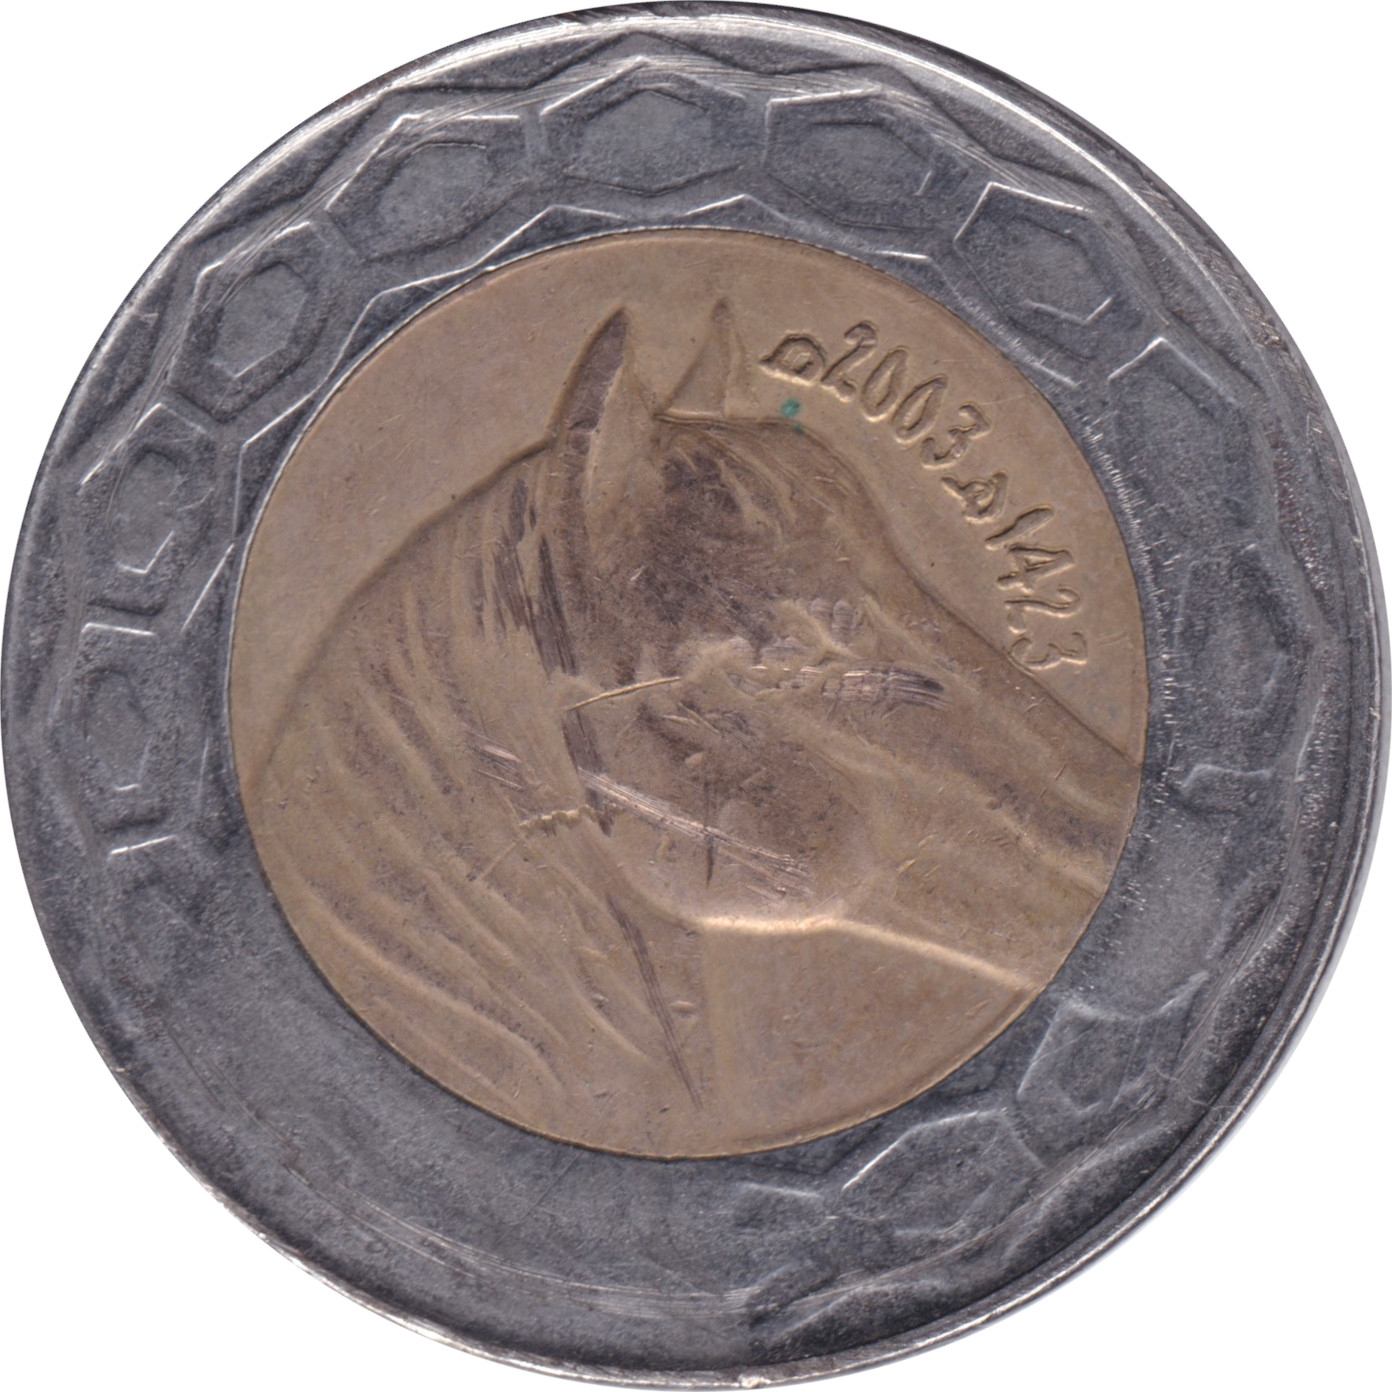 100 dinars - Horse